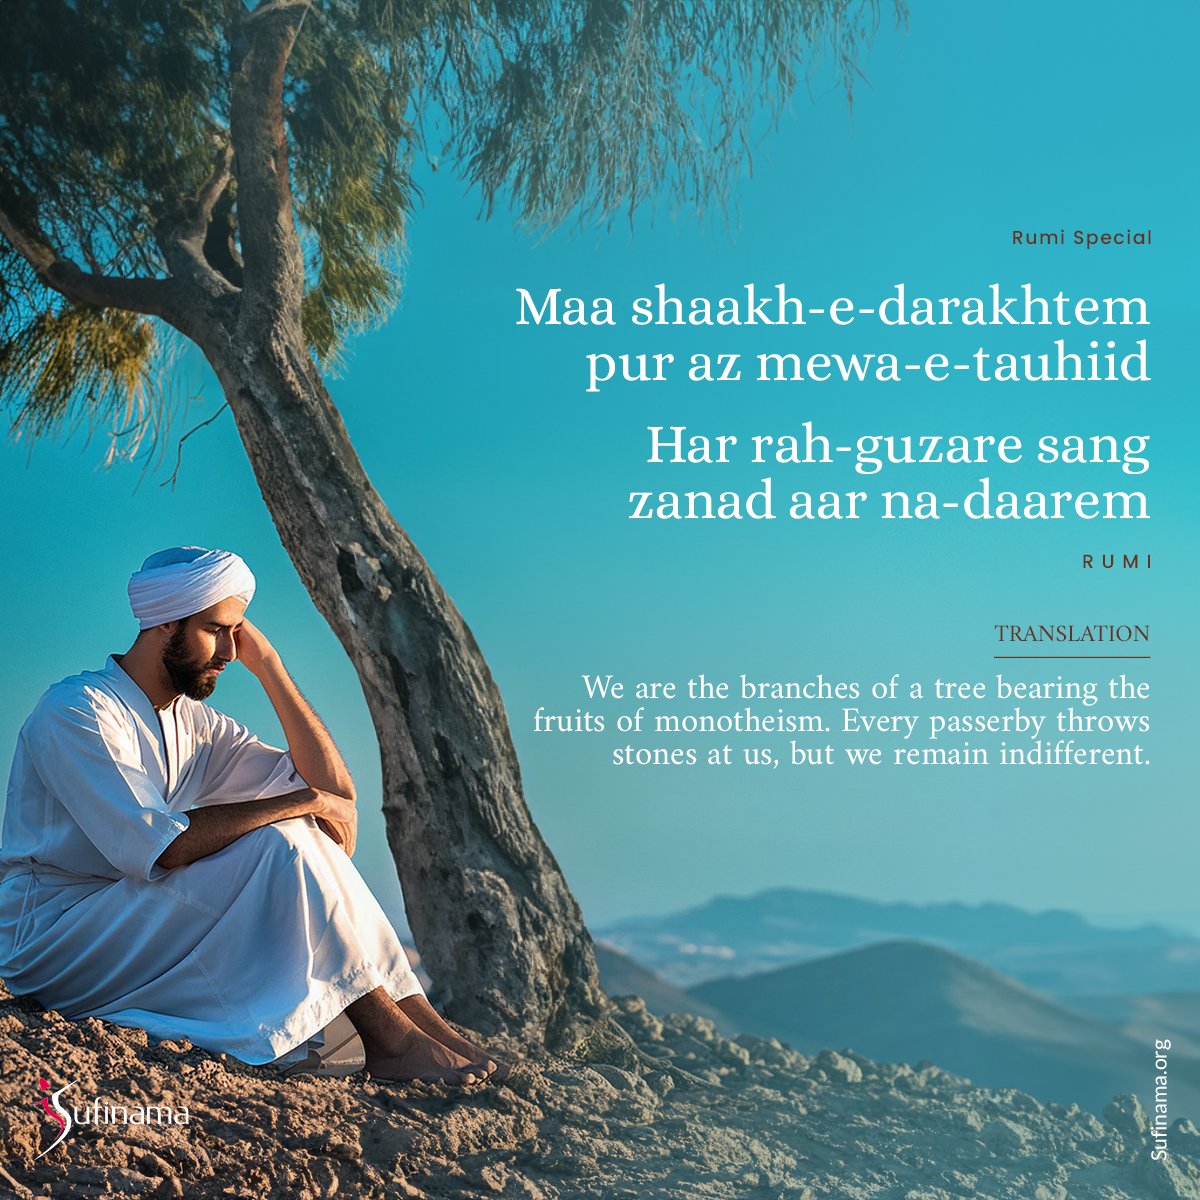 Rumi Special by Sufinama

#sufinama #sufism #sufi #Rumispecial